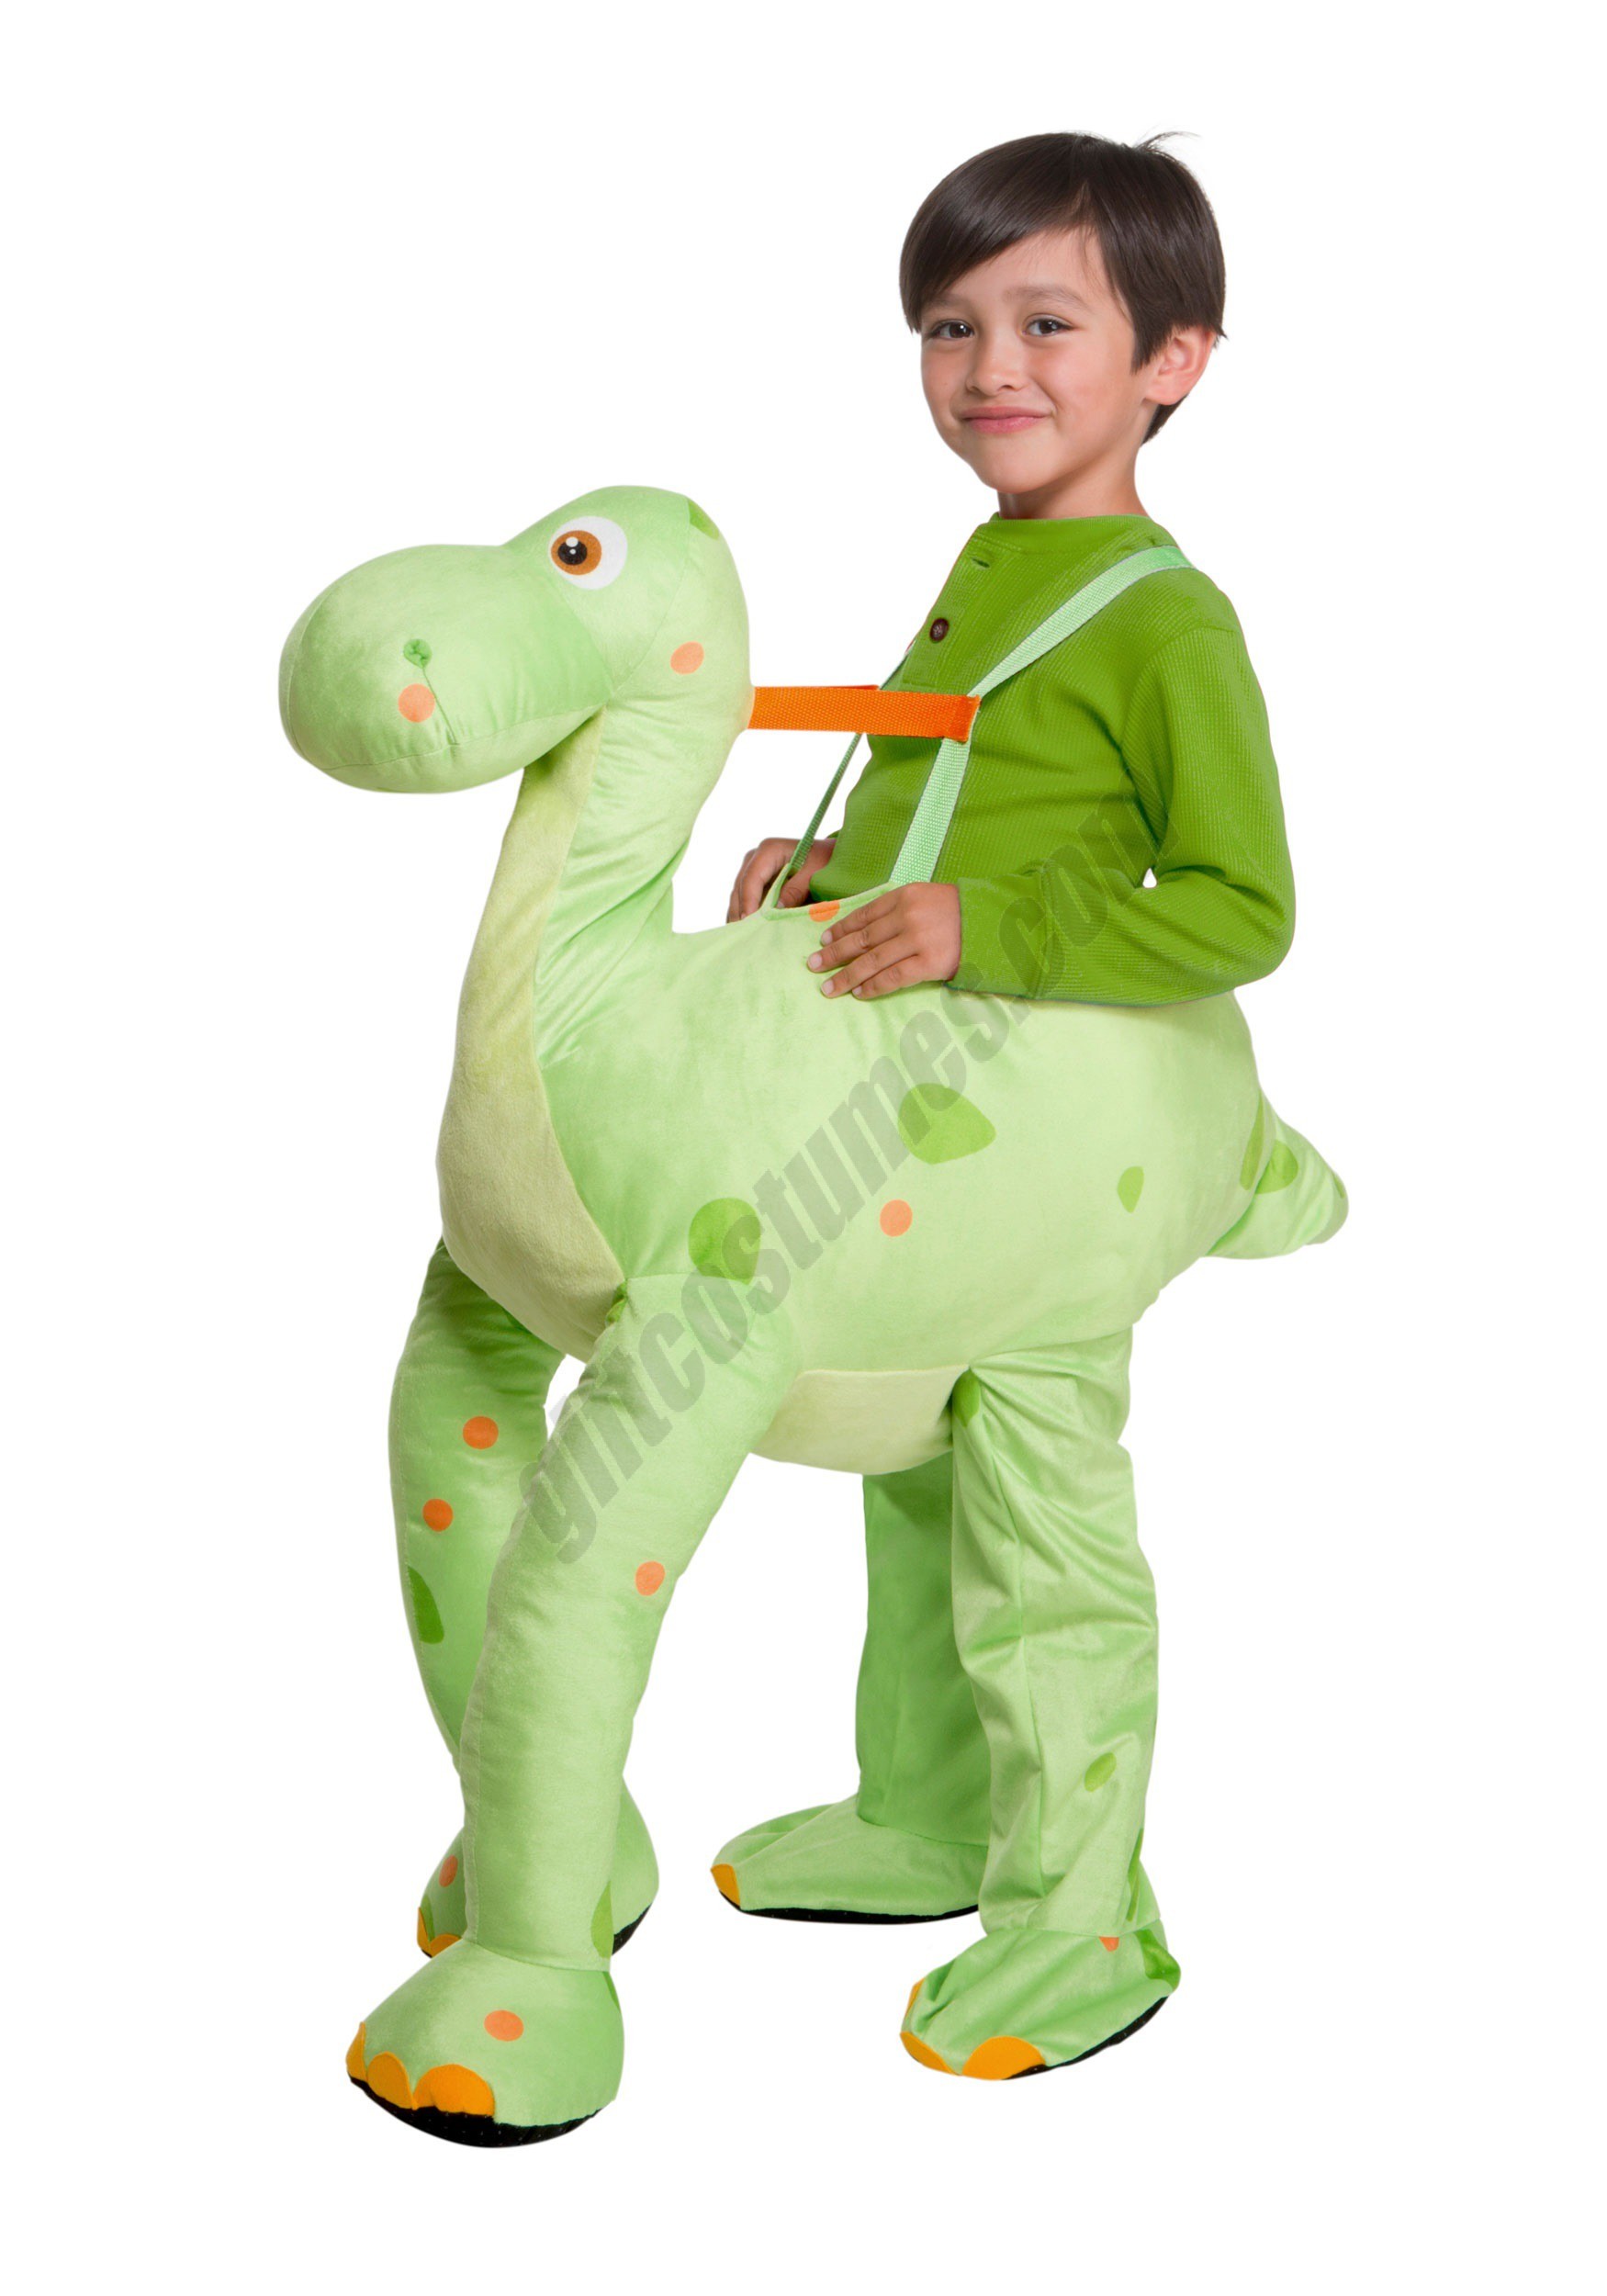 Green Dinosaur Toddler Costume Promotions - Green Dinosaur Toddler Costume Promotions